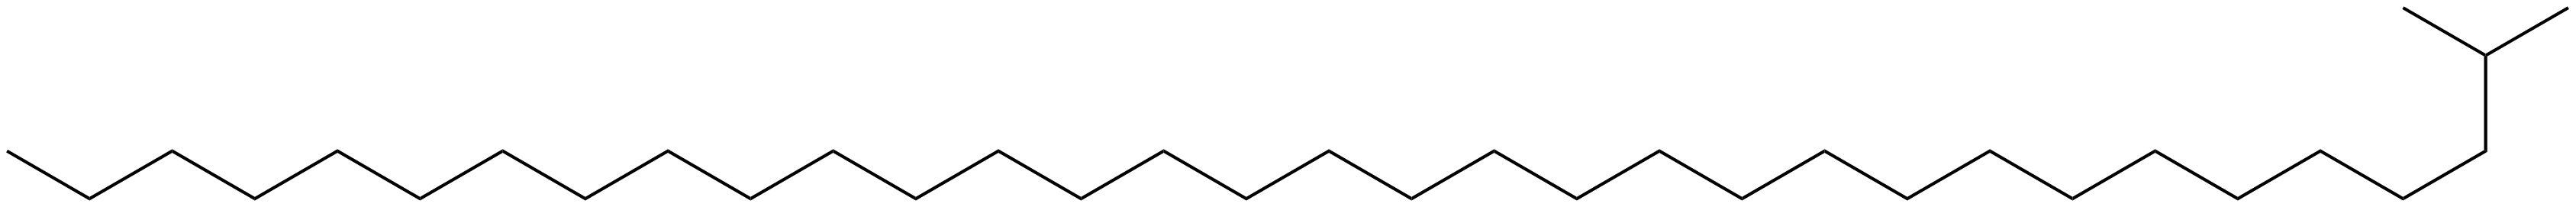 Image of 2-methyltritriacontane